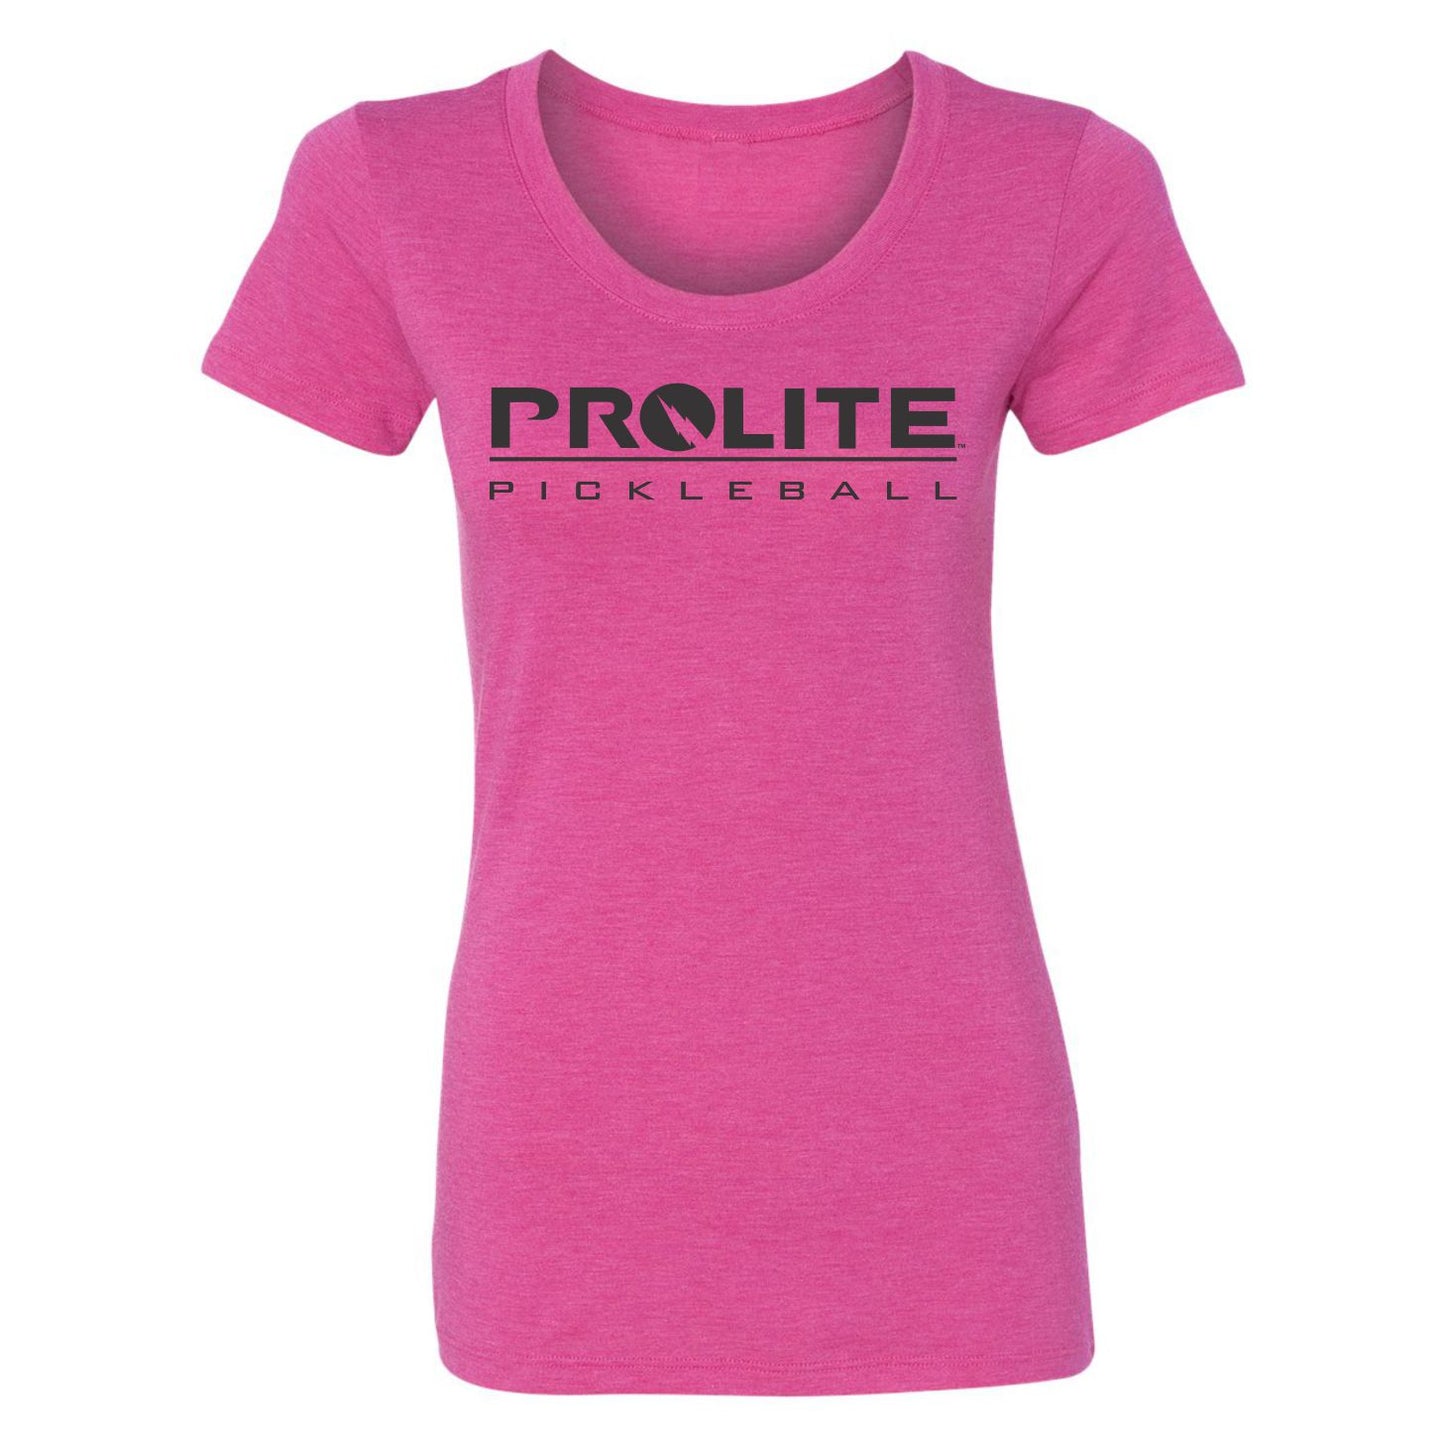 Women's Prolite Pickleball Tee Shirt